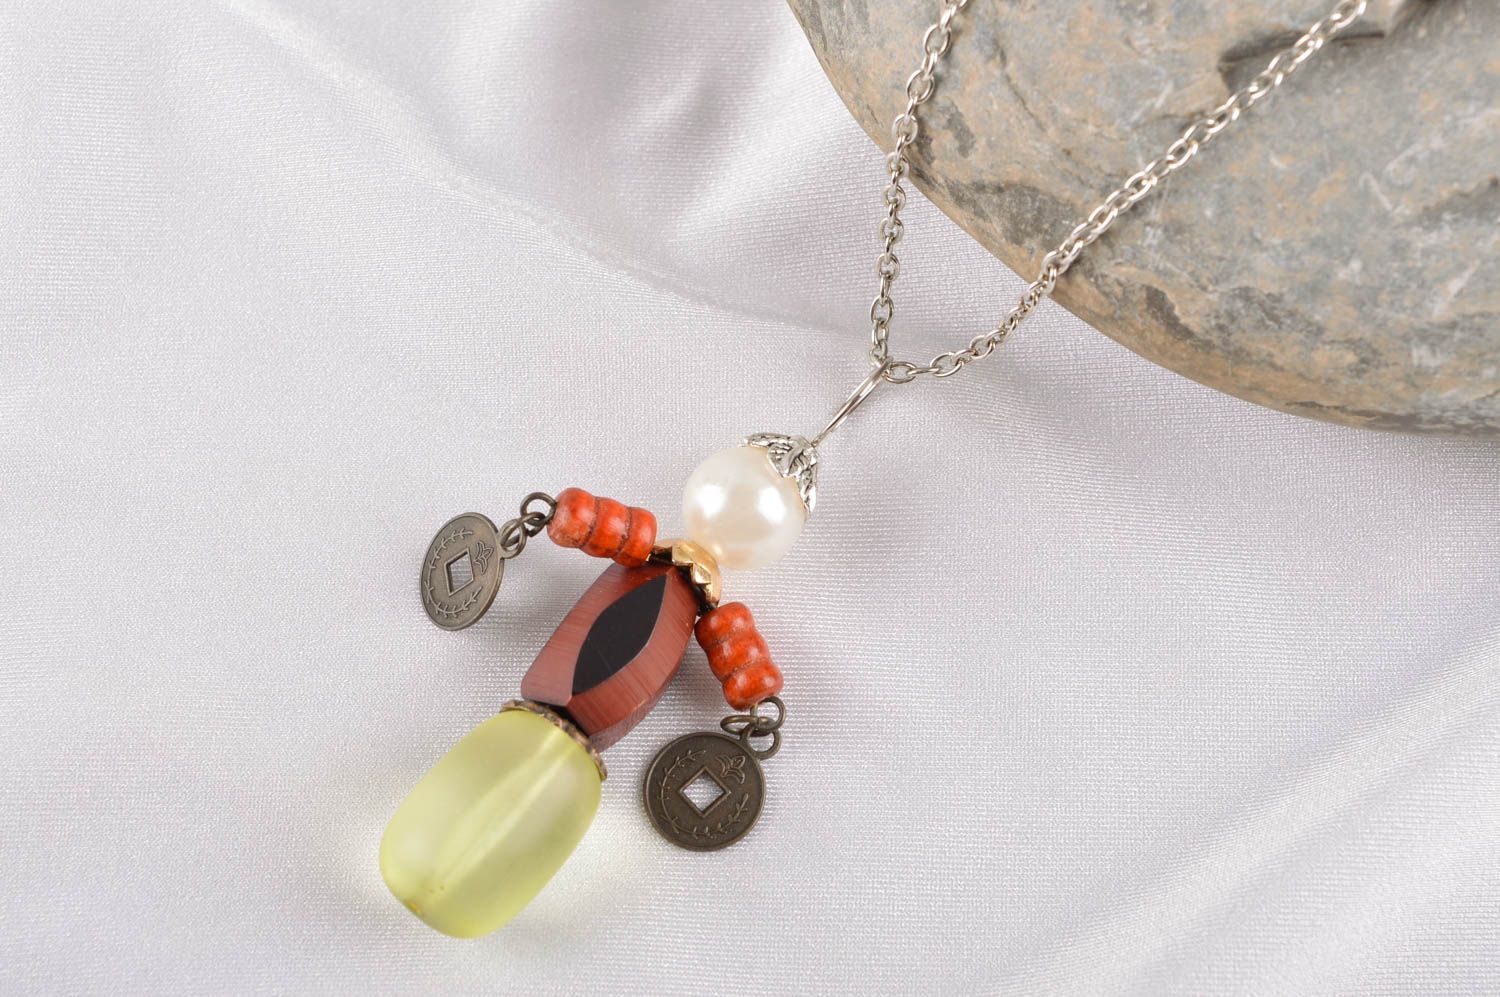 Wooden pendant handmade beaded pendant for women chain pendant fashion jewelry photo 1